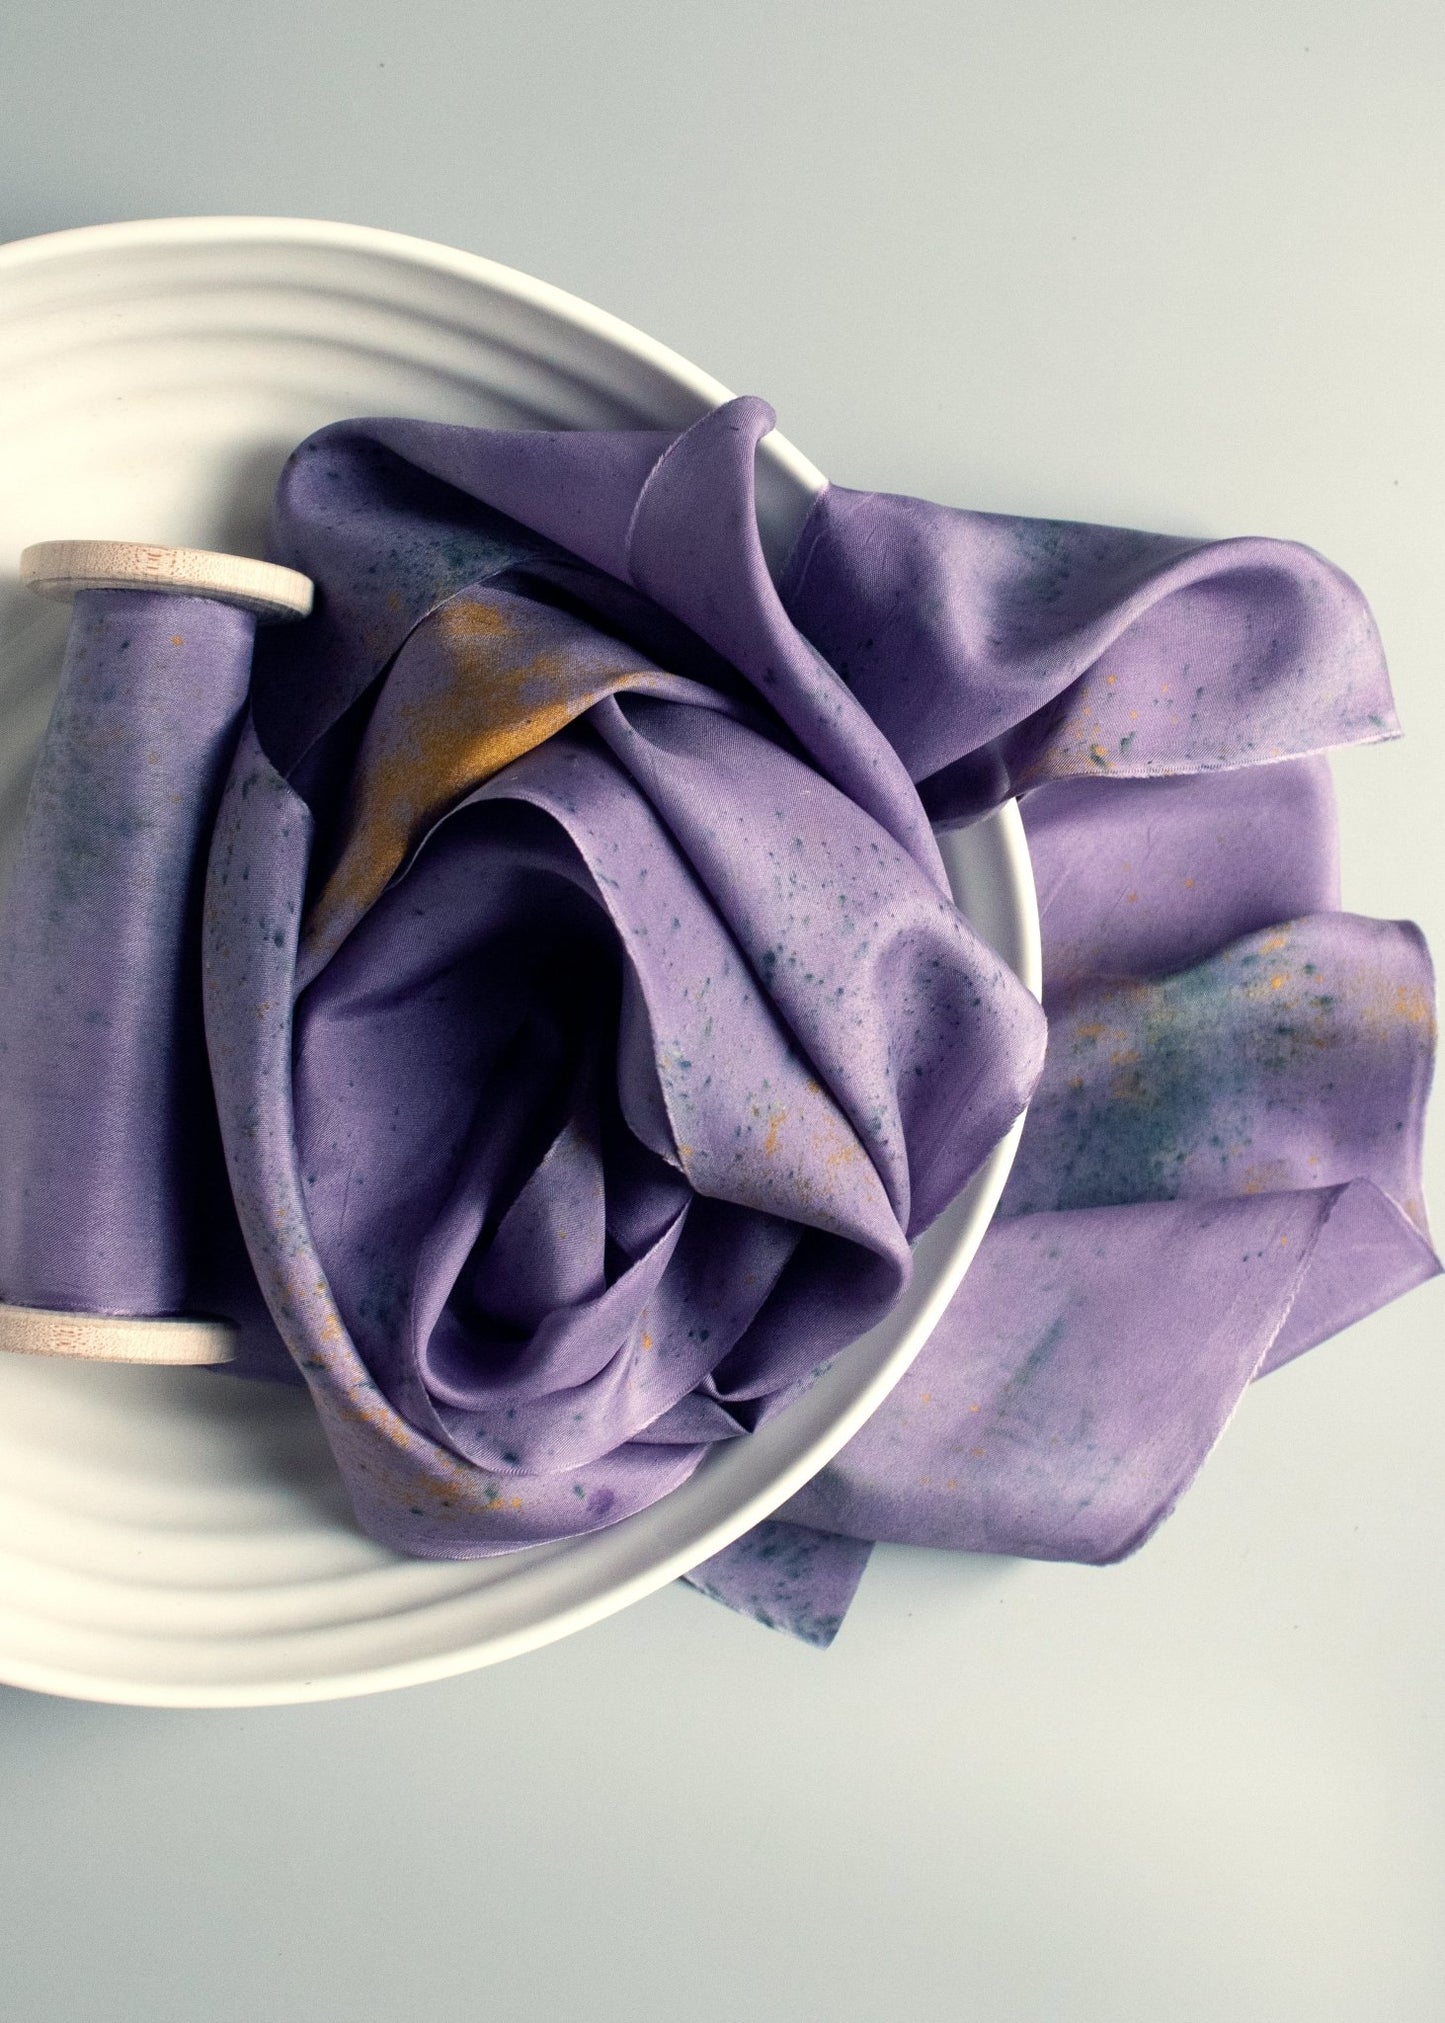 Geranium ribbon setGibb & Hiney, hand-dyed silk ribbon, 5 colors